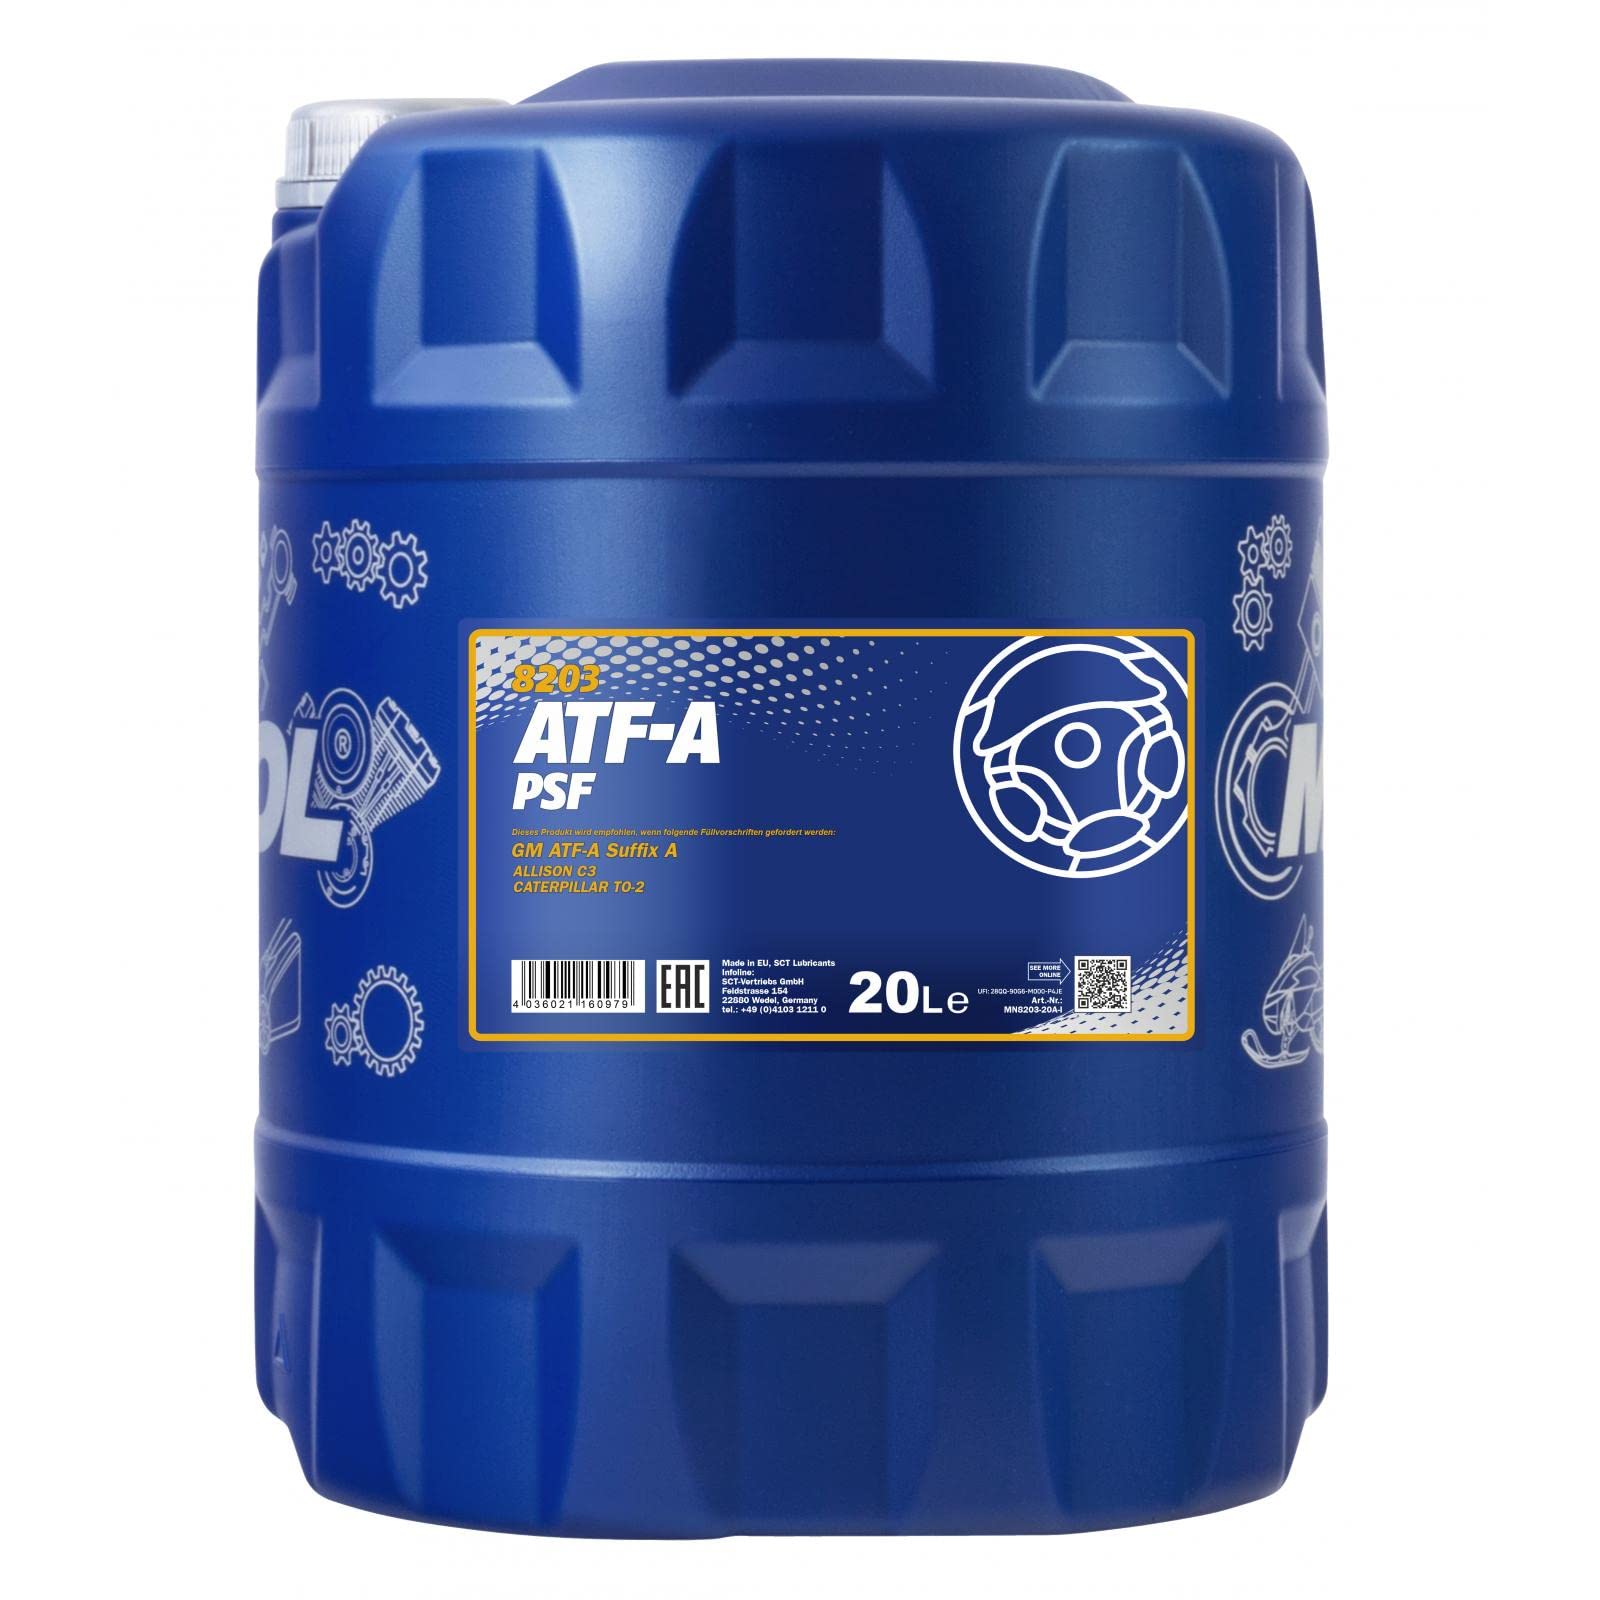 20 Liter Original MANNOL Hydrauliköl ATF-A PSF Hydraulic Fluid Oil von MANNOL